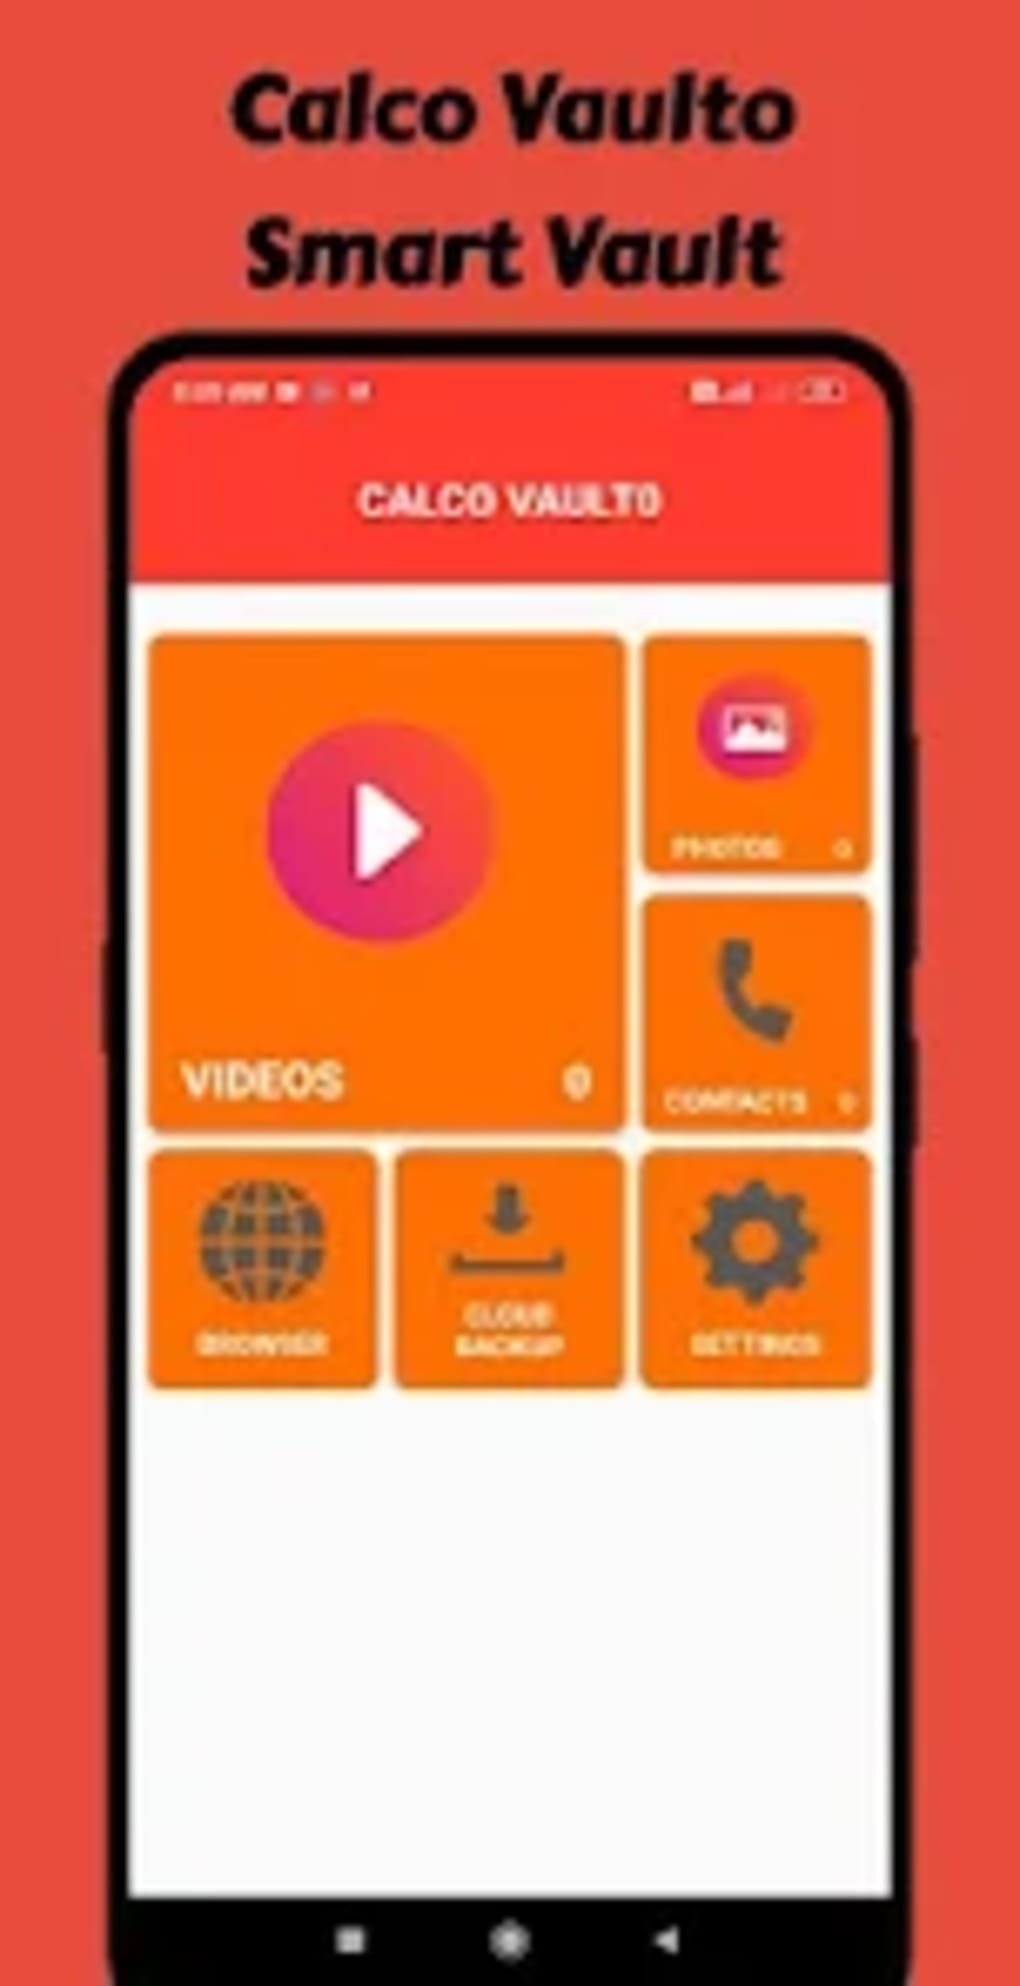 Calco Vaulto - videos photos for Android - Download